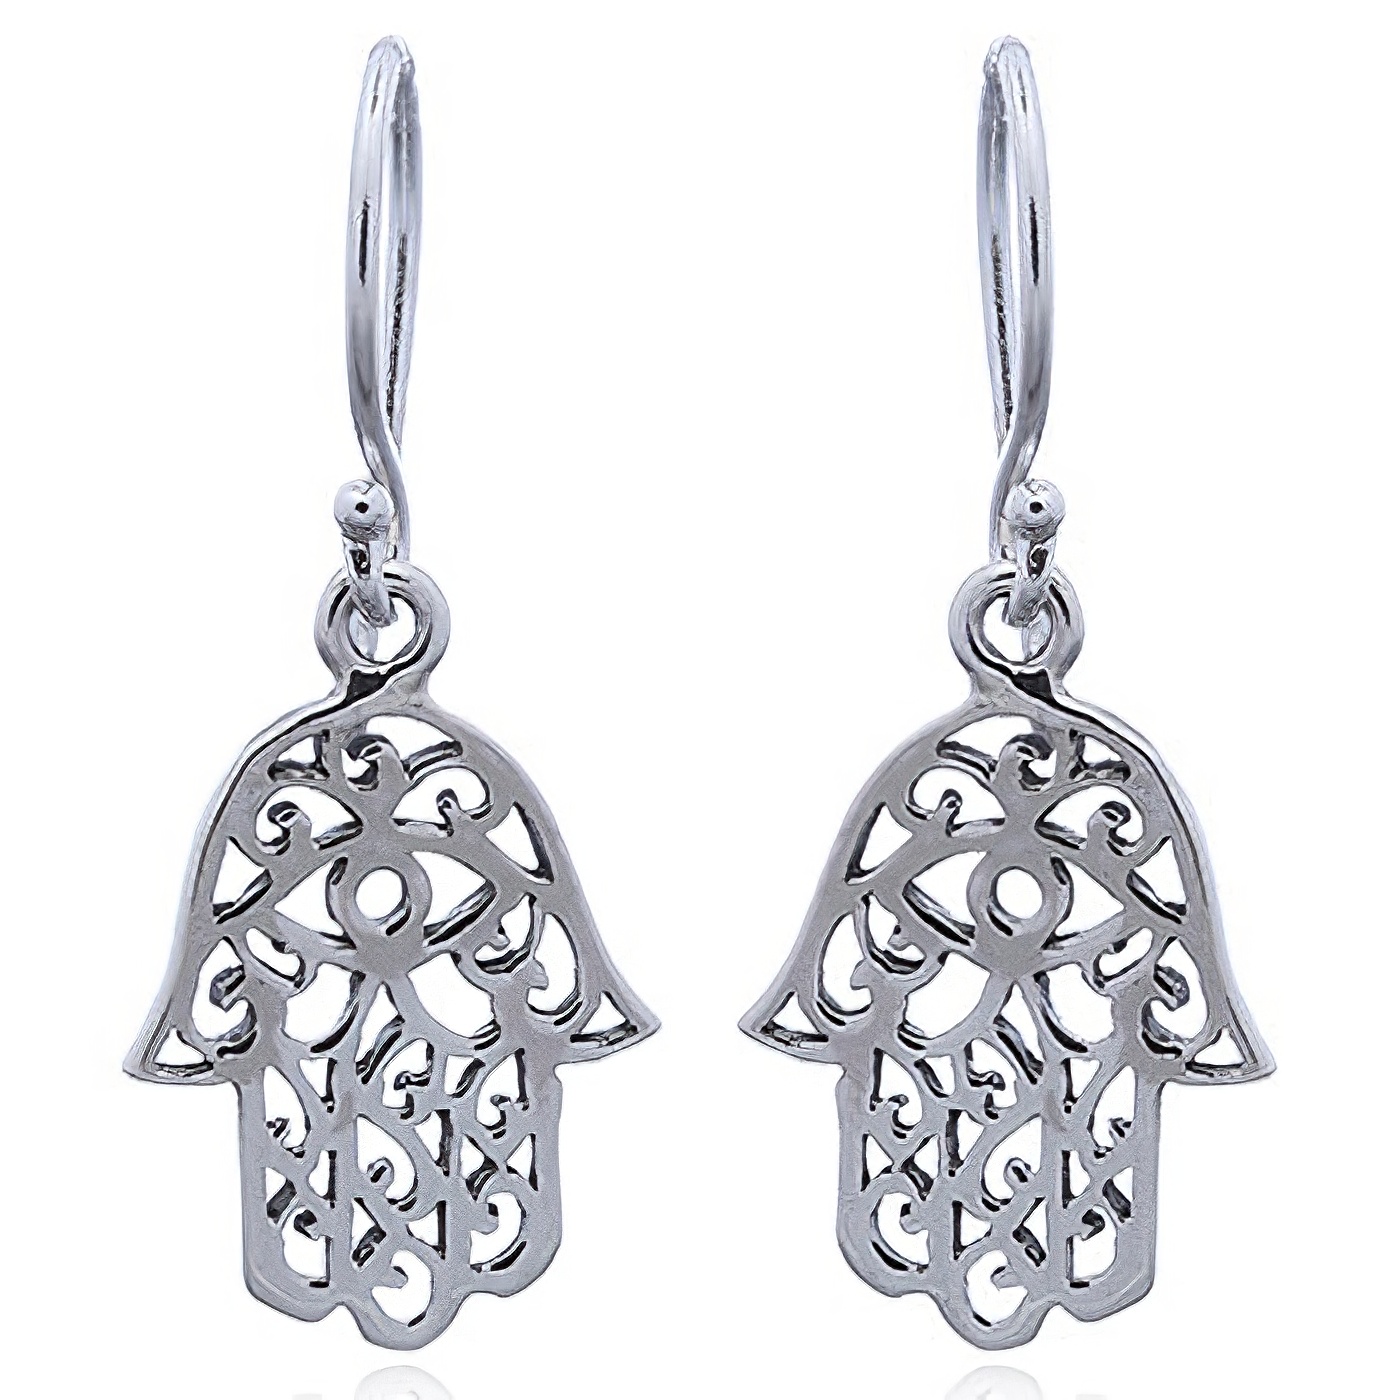 Exquisite 925 Silver Hamsa Dangle Earrings by BeYindi 